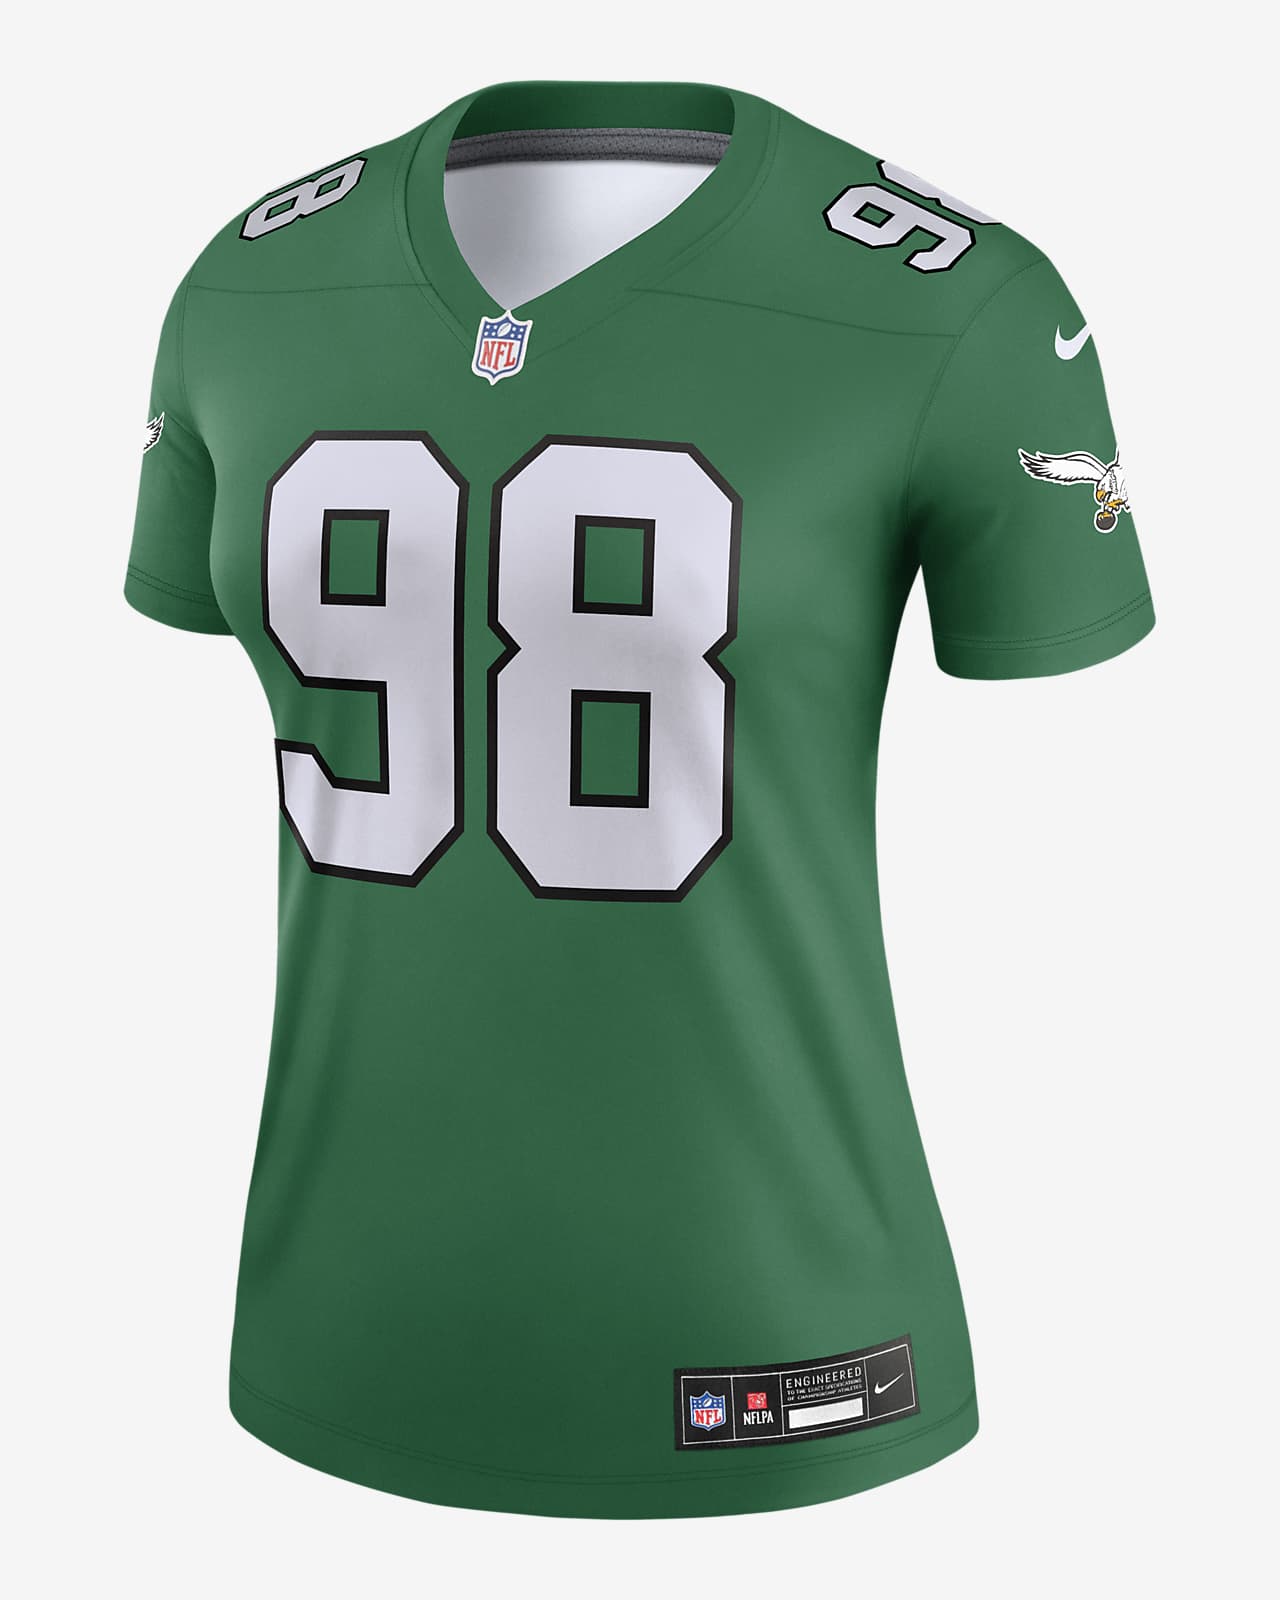 Jersey Nike Dri-FIT de la NFL Legend para mujer Jalen Carter Philadelphia Eagles